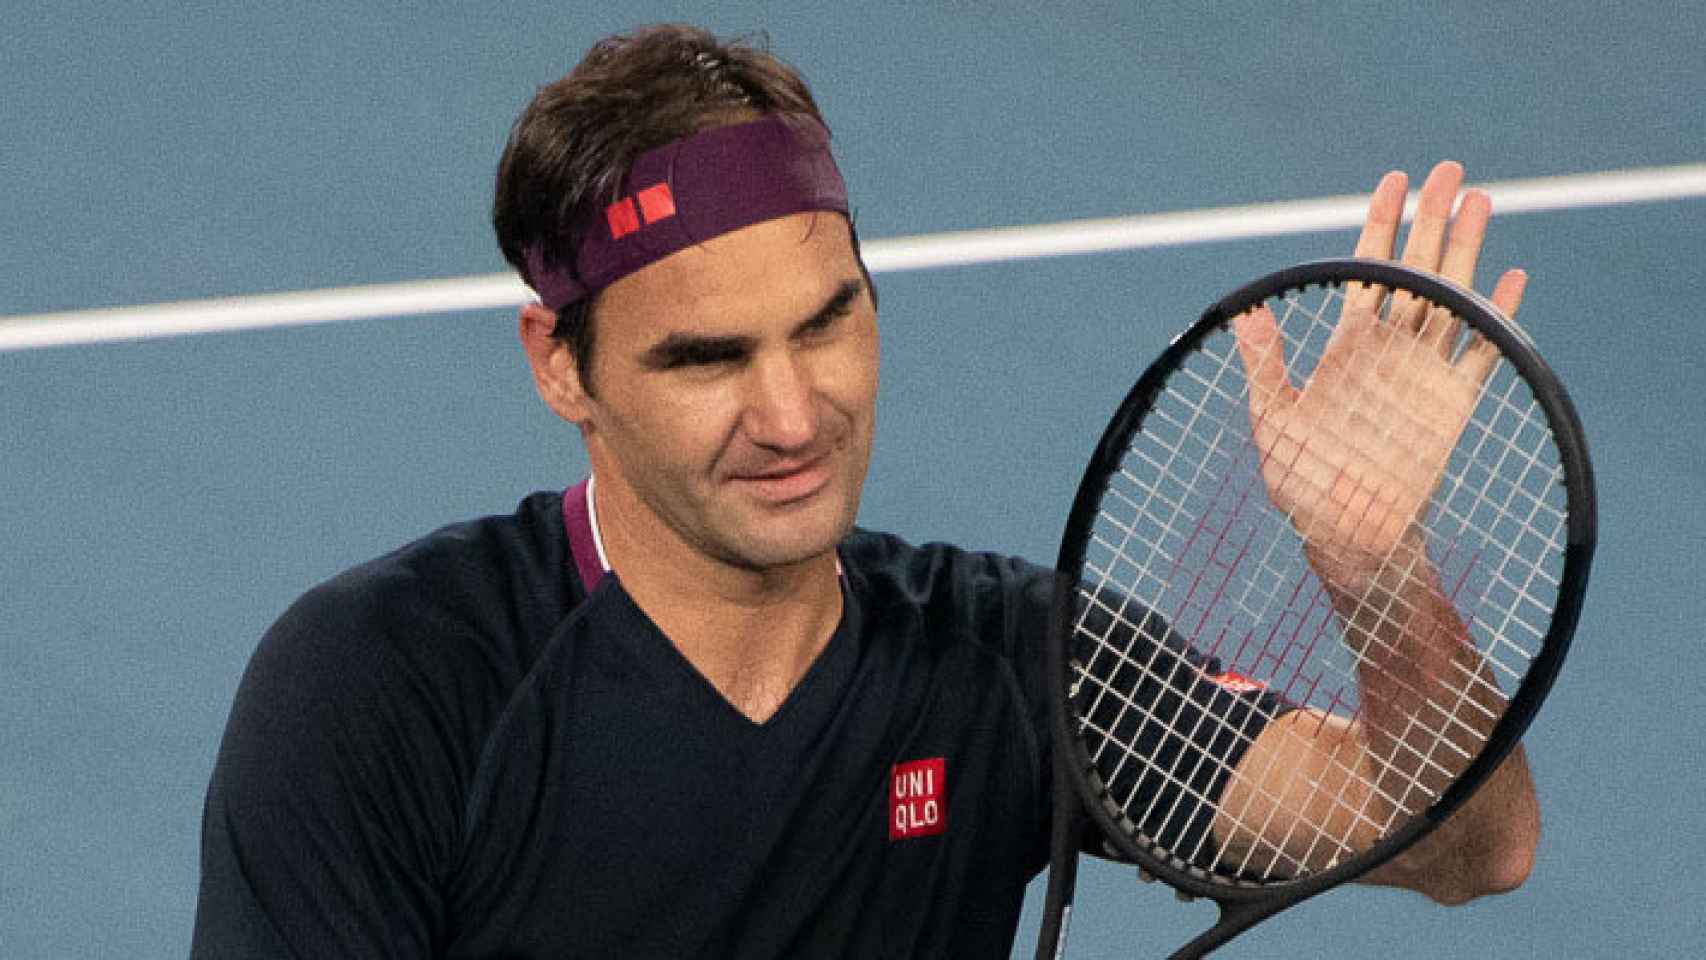 Roger Federer en el Open de Australia 2020. Foto: Rob Keating (CC BY 2.0)